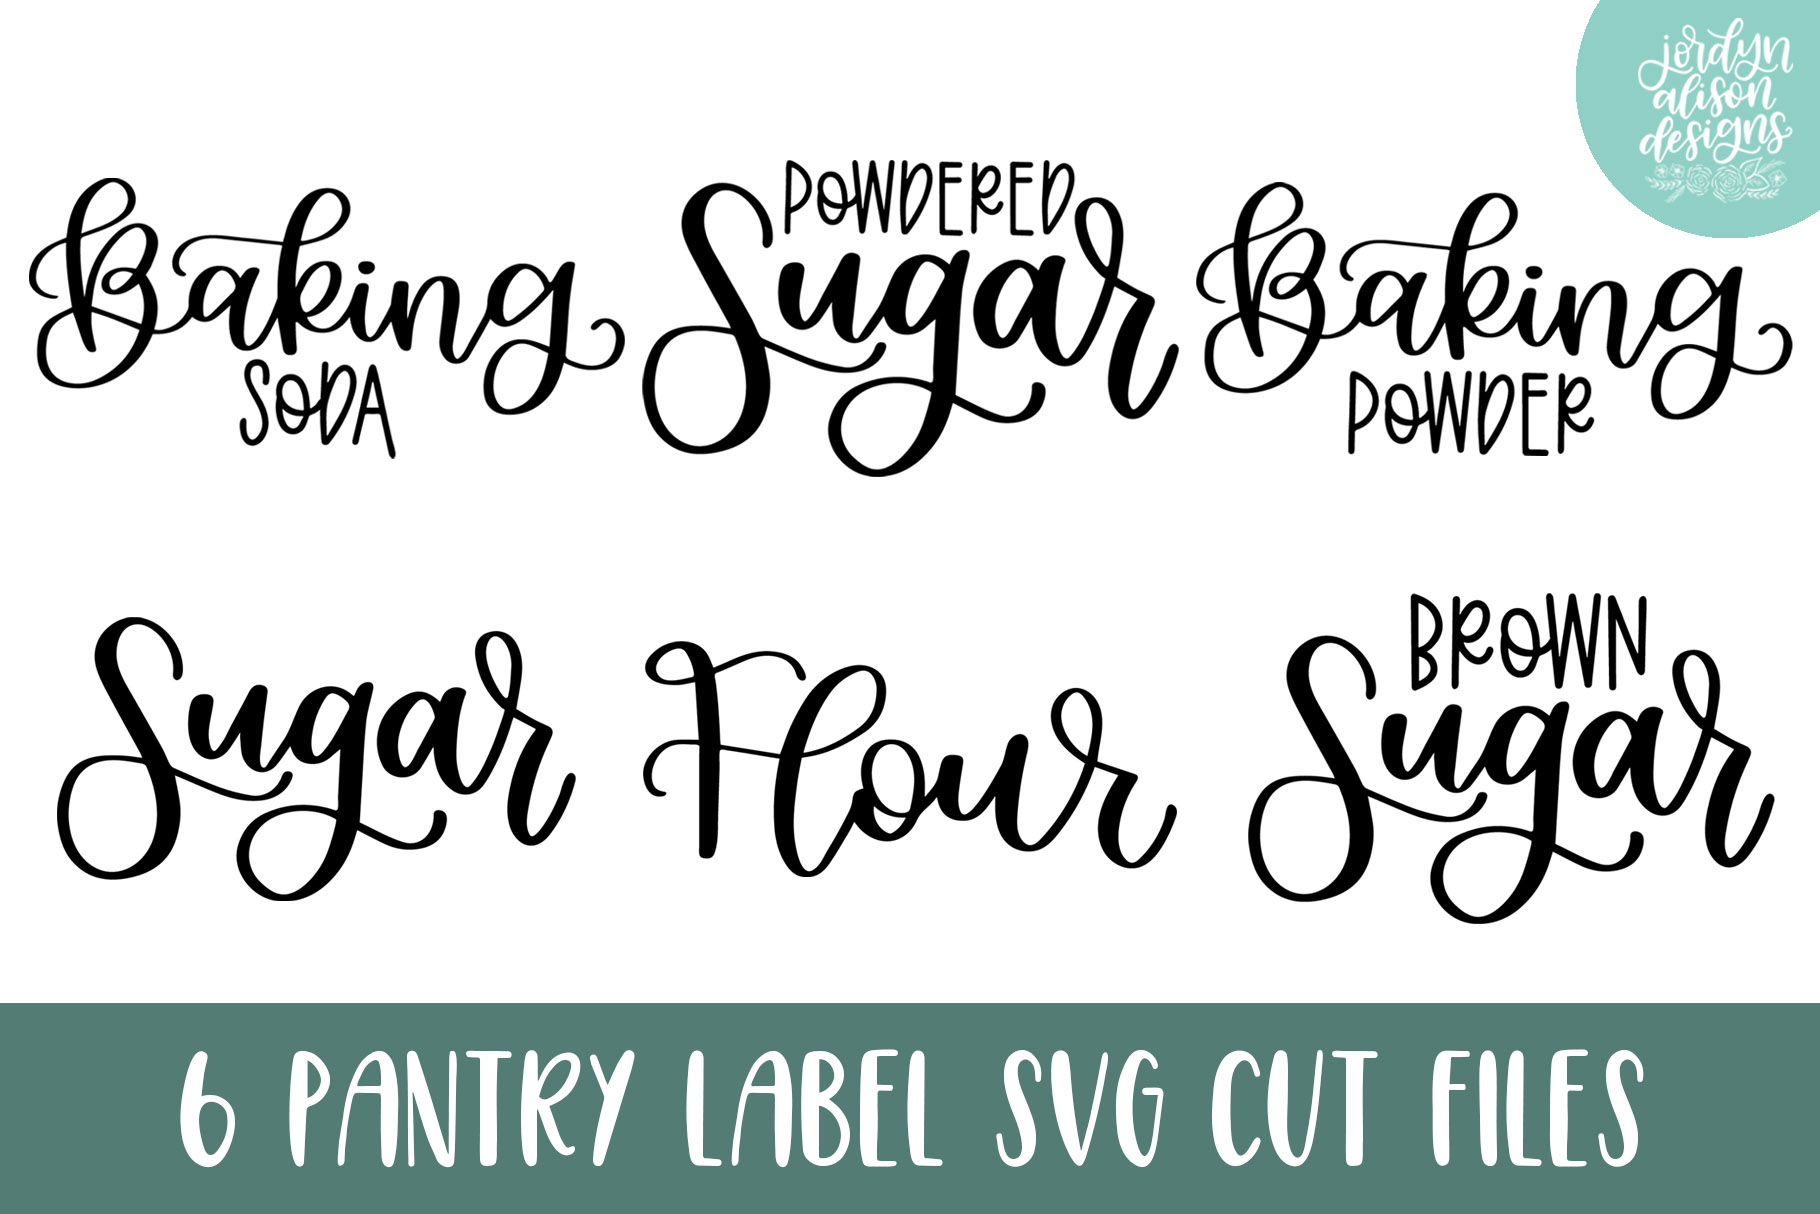 Download 6 Pantry Label Hand Lettered SVG Cut Files, Baking